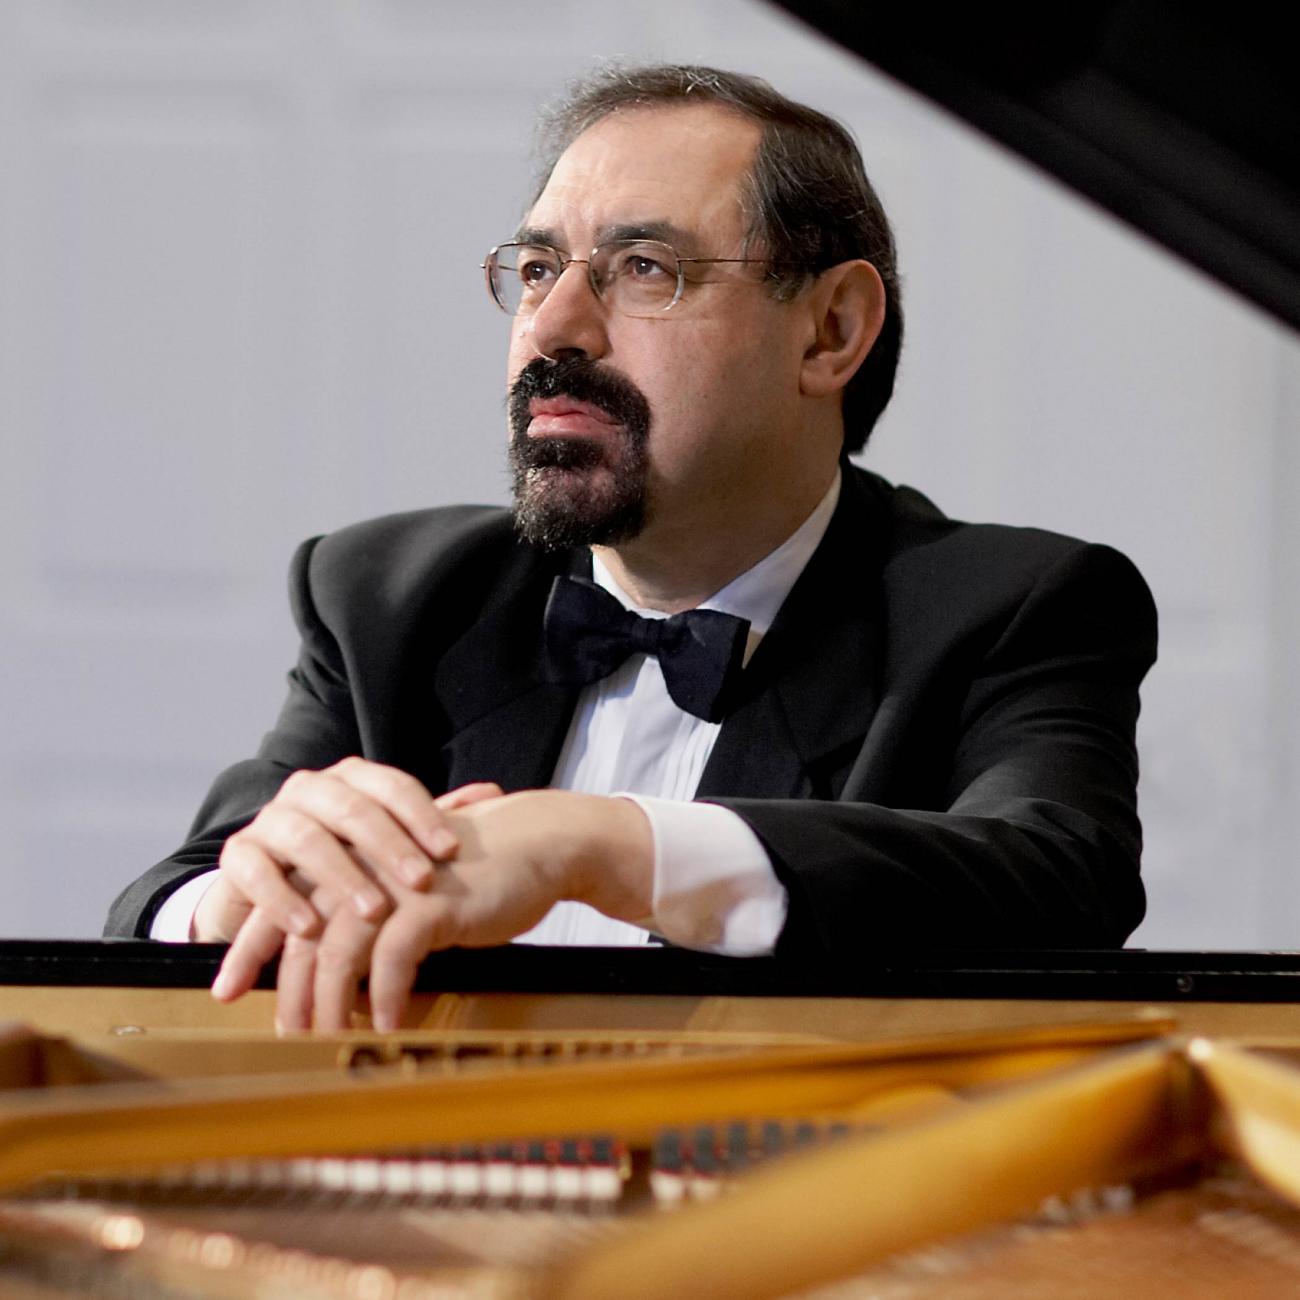 boris burman - pianist